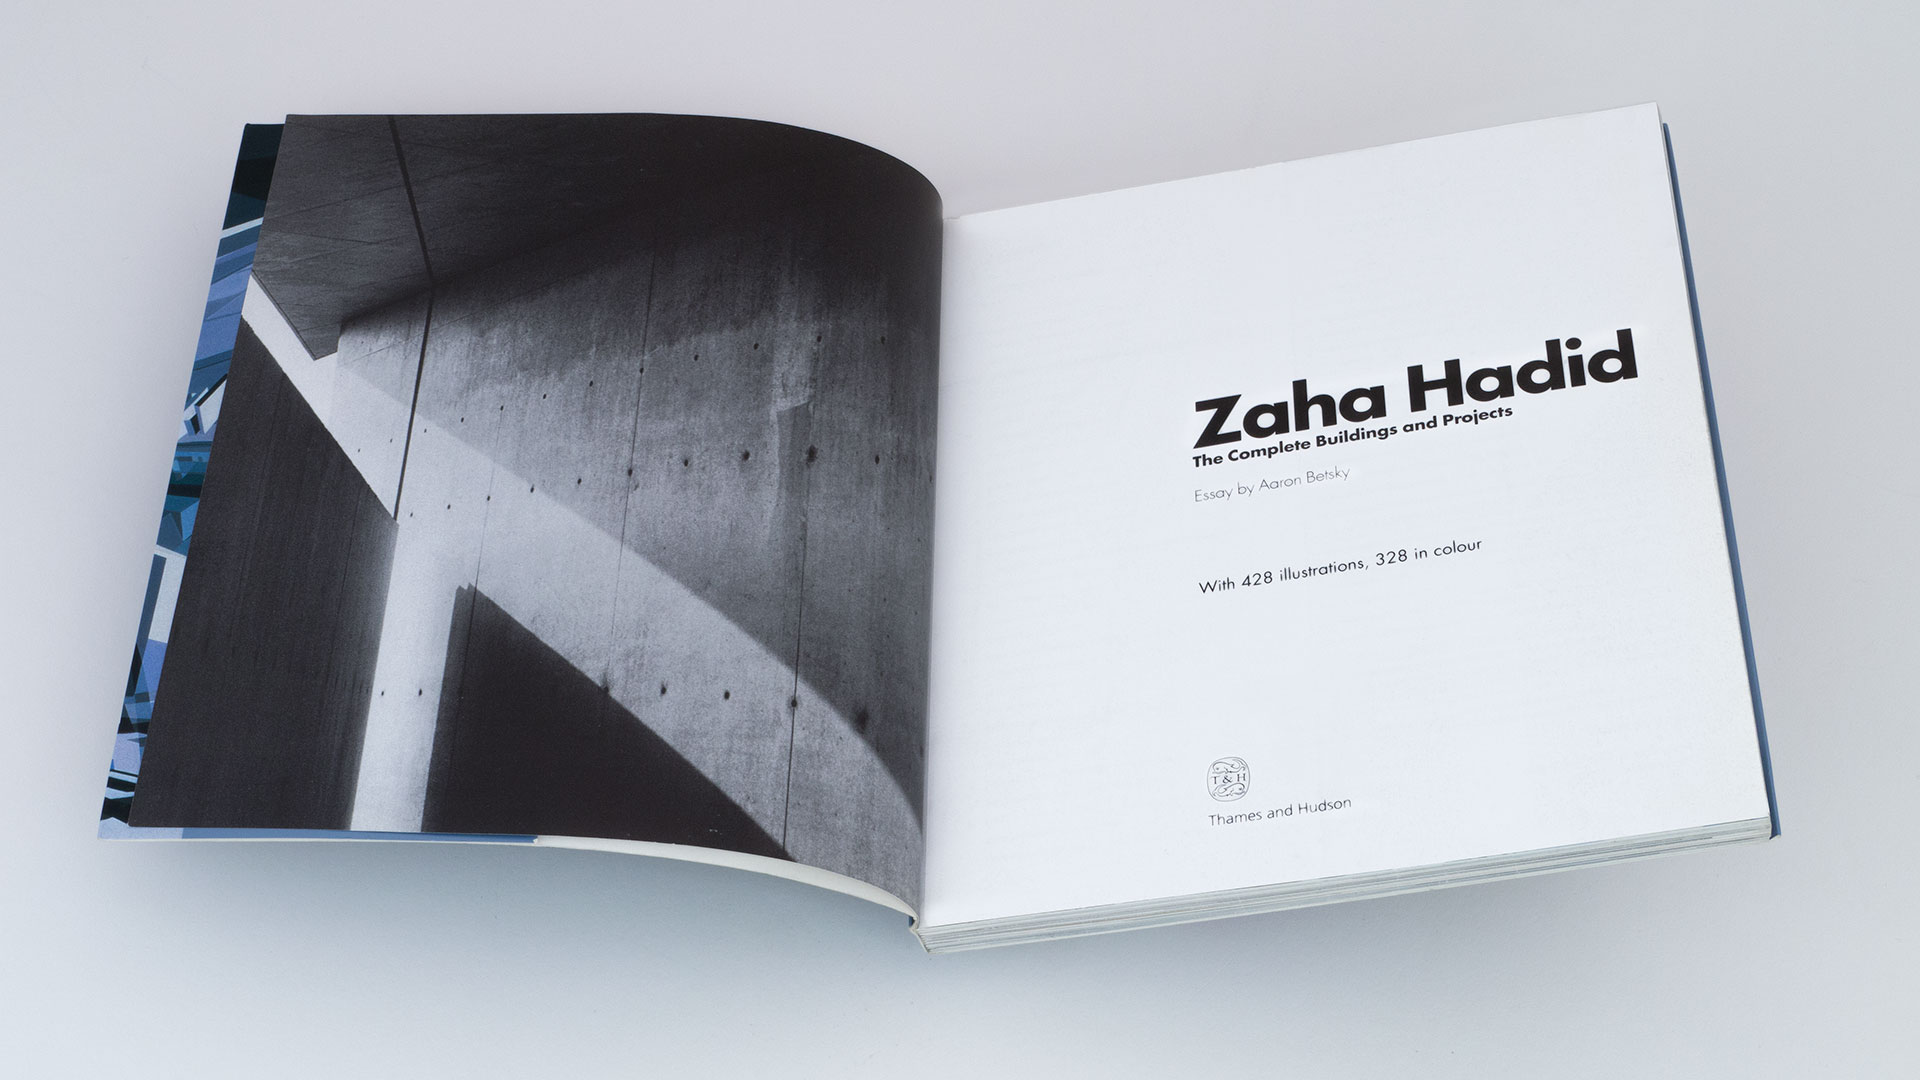 Zaha Hadid, Thames and Hudson